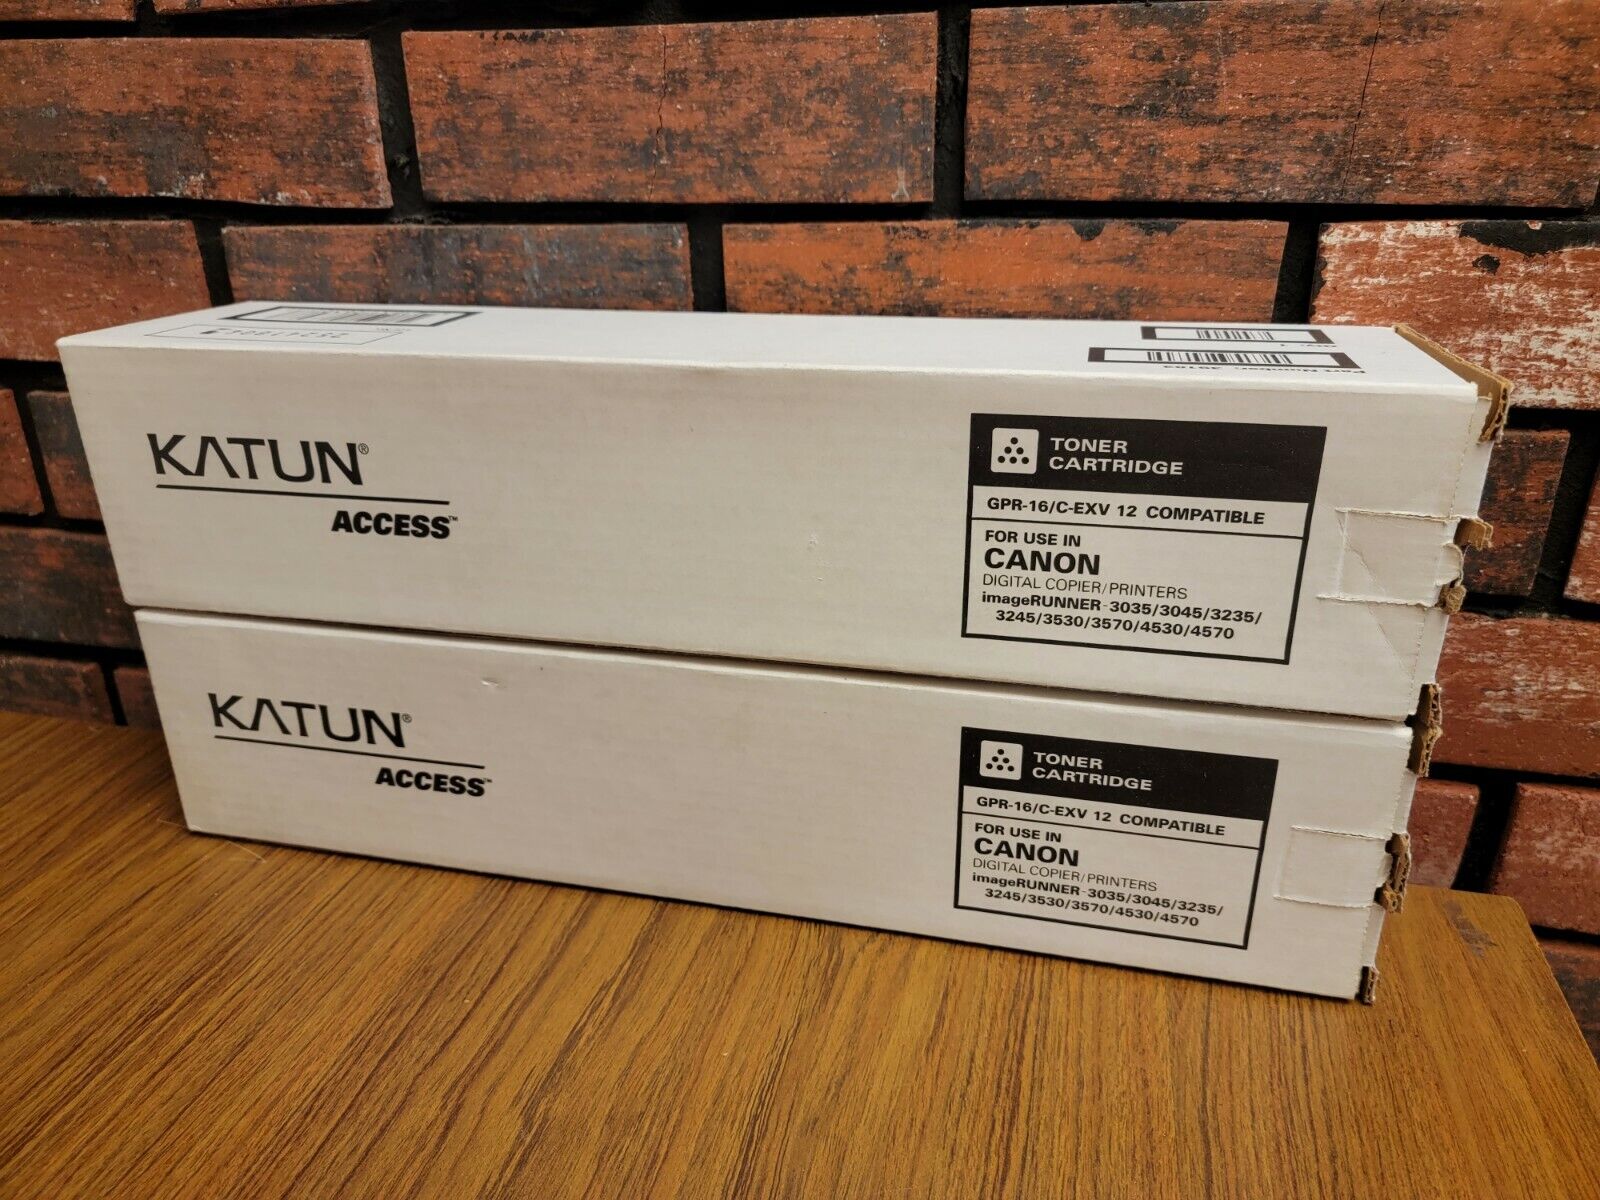 Lot of 2 Katun Access GPR-16/C-EXV 12 Toner Compatible Canon imageRUNNER